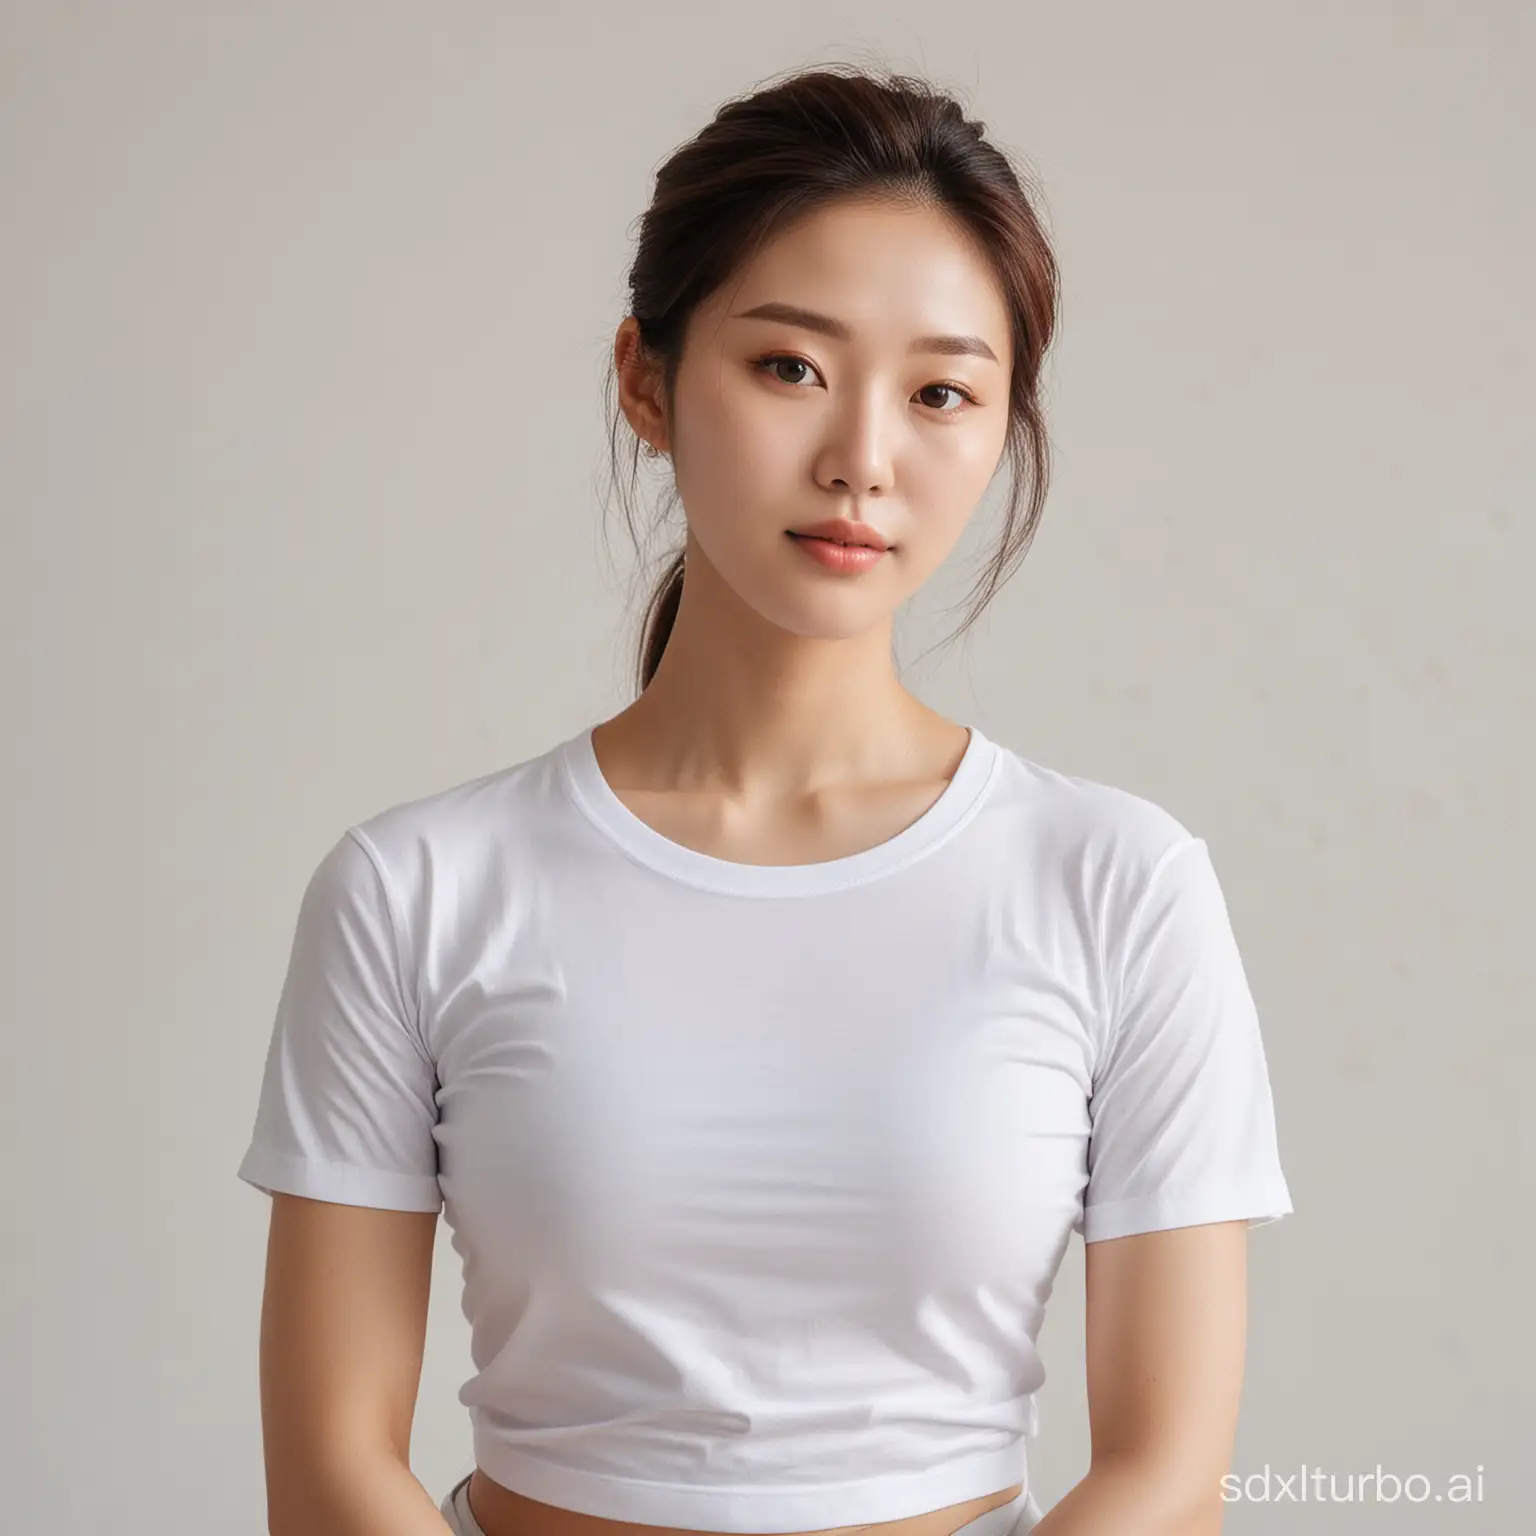 Korean yoga beauty wearing a white T-shirt